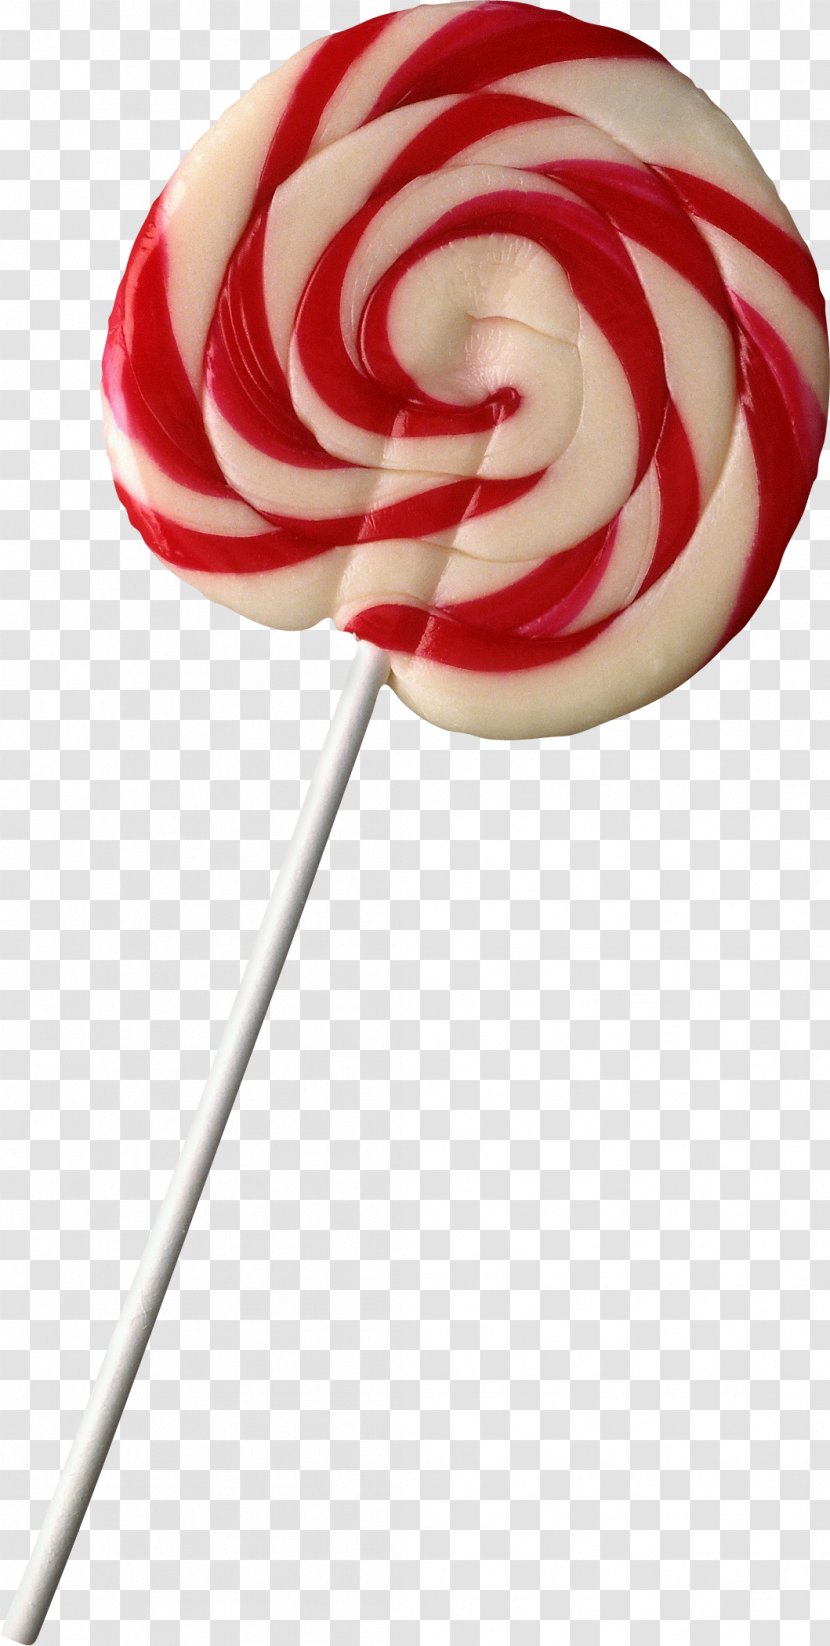 Lollipop Dessert Candy Transparent PNG